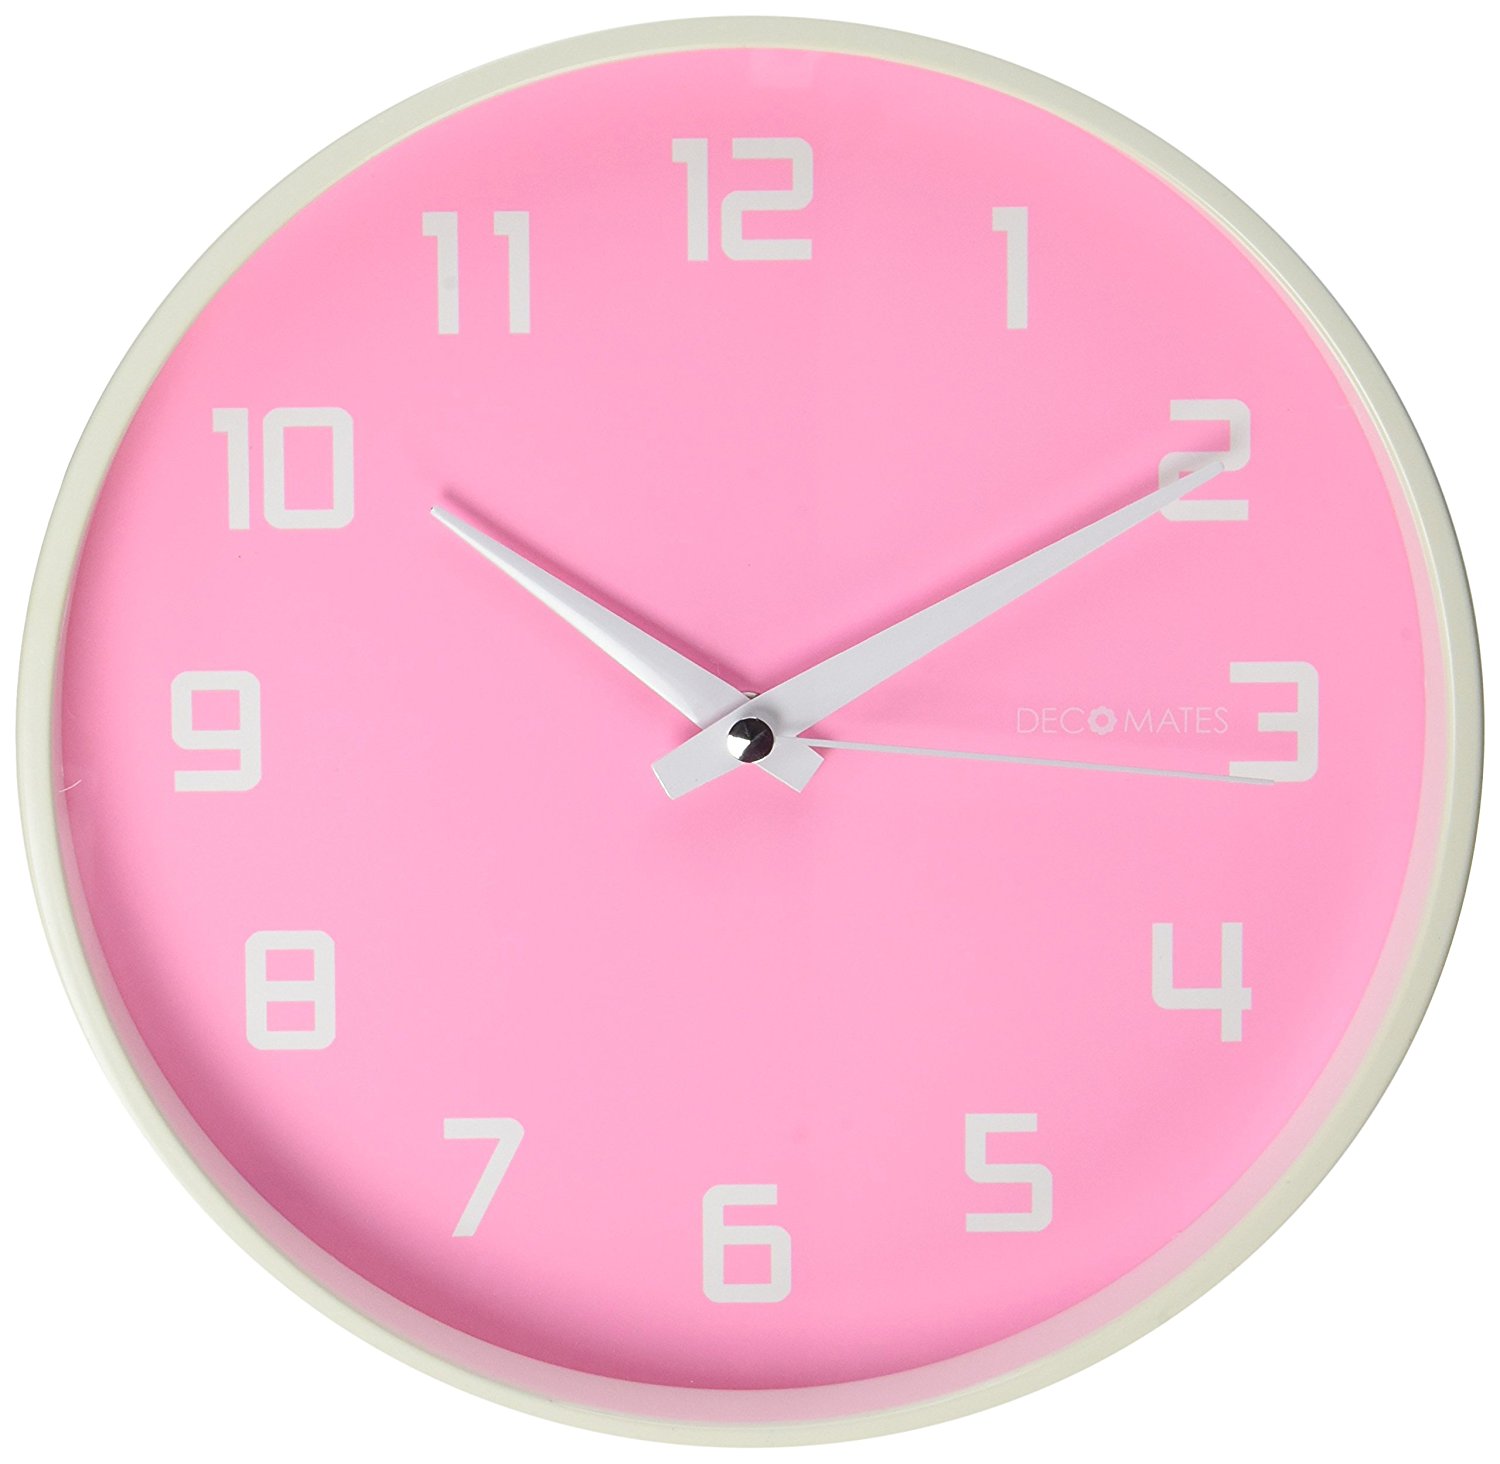 Amazon.com: DecoMates Non-Ticking Silent Wall Clock, Pink Fruity ...